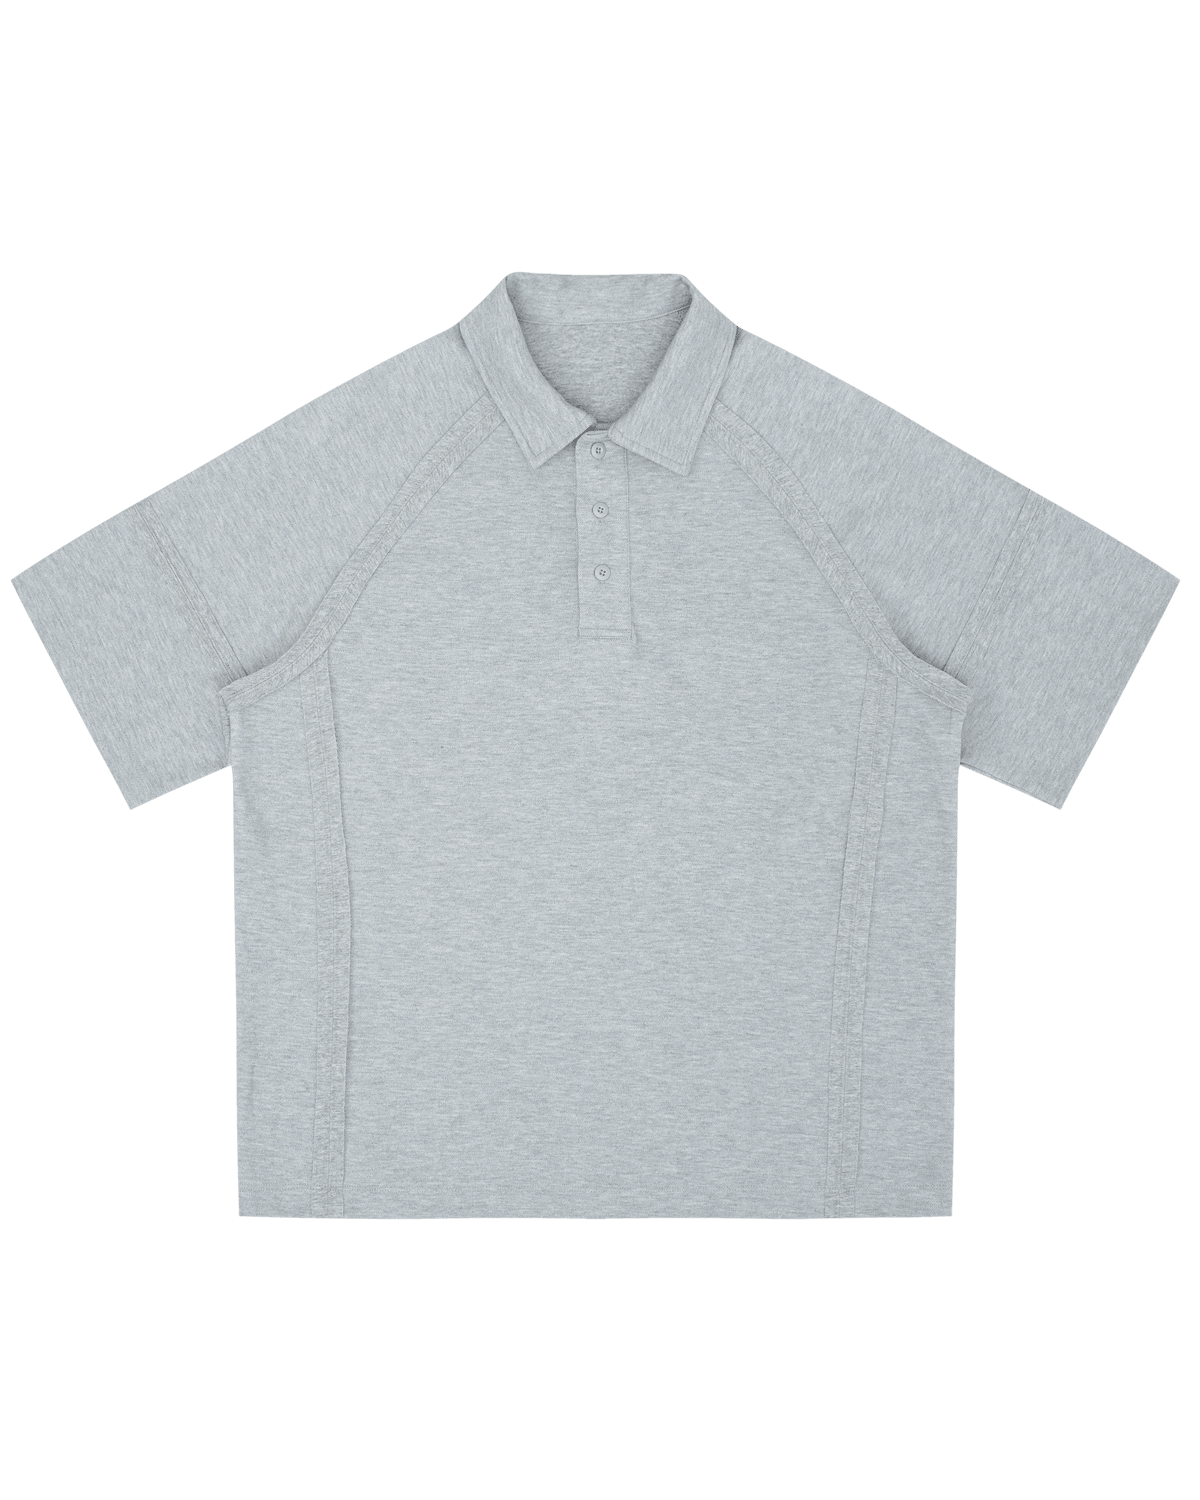 TAKA ORIGINAL LIMITED - Off The Label polo shirt grey